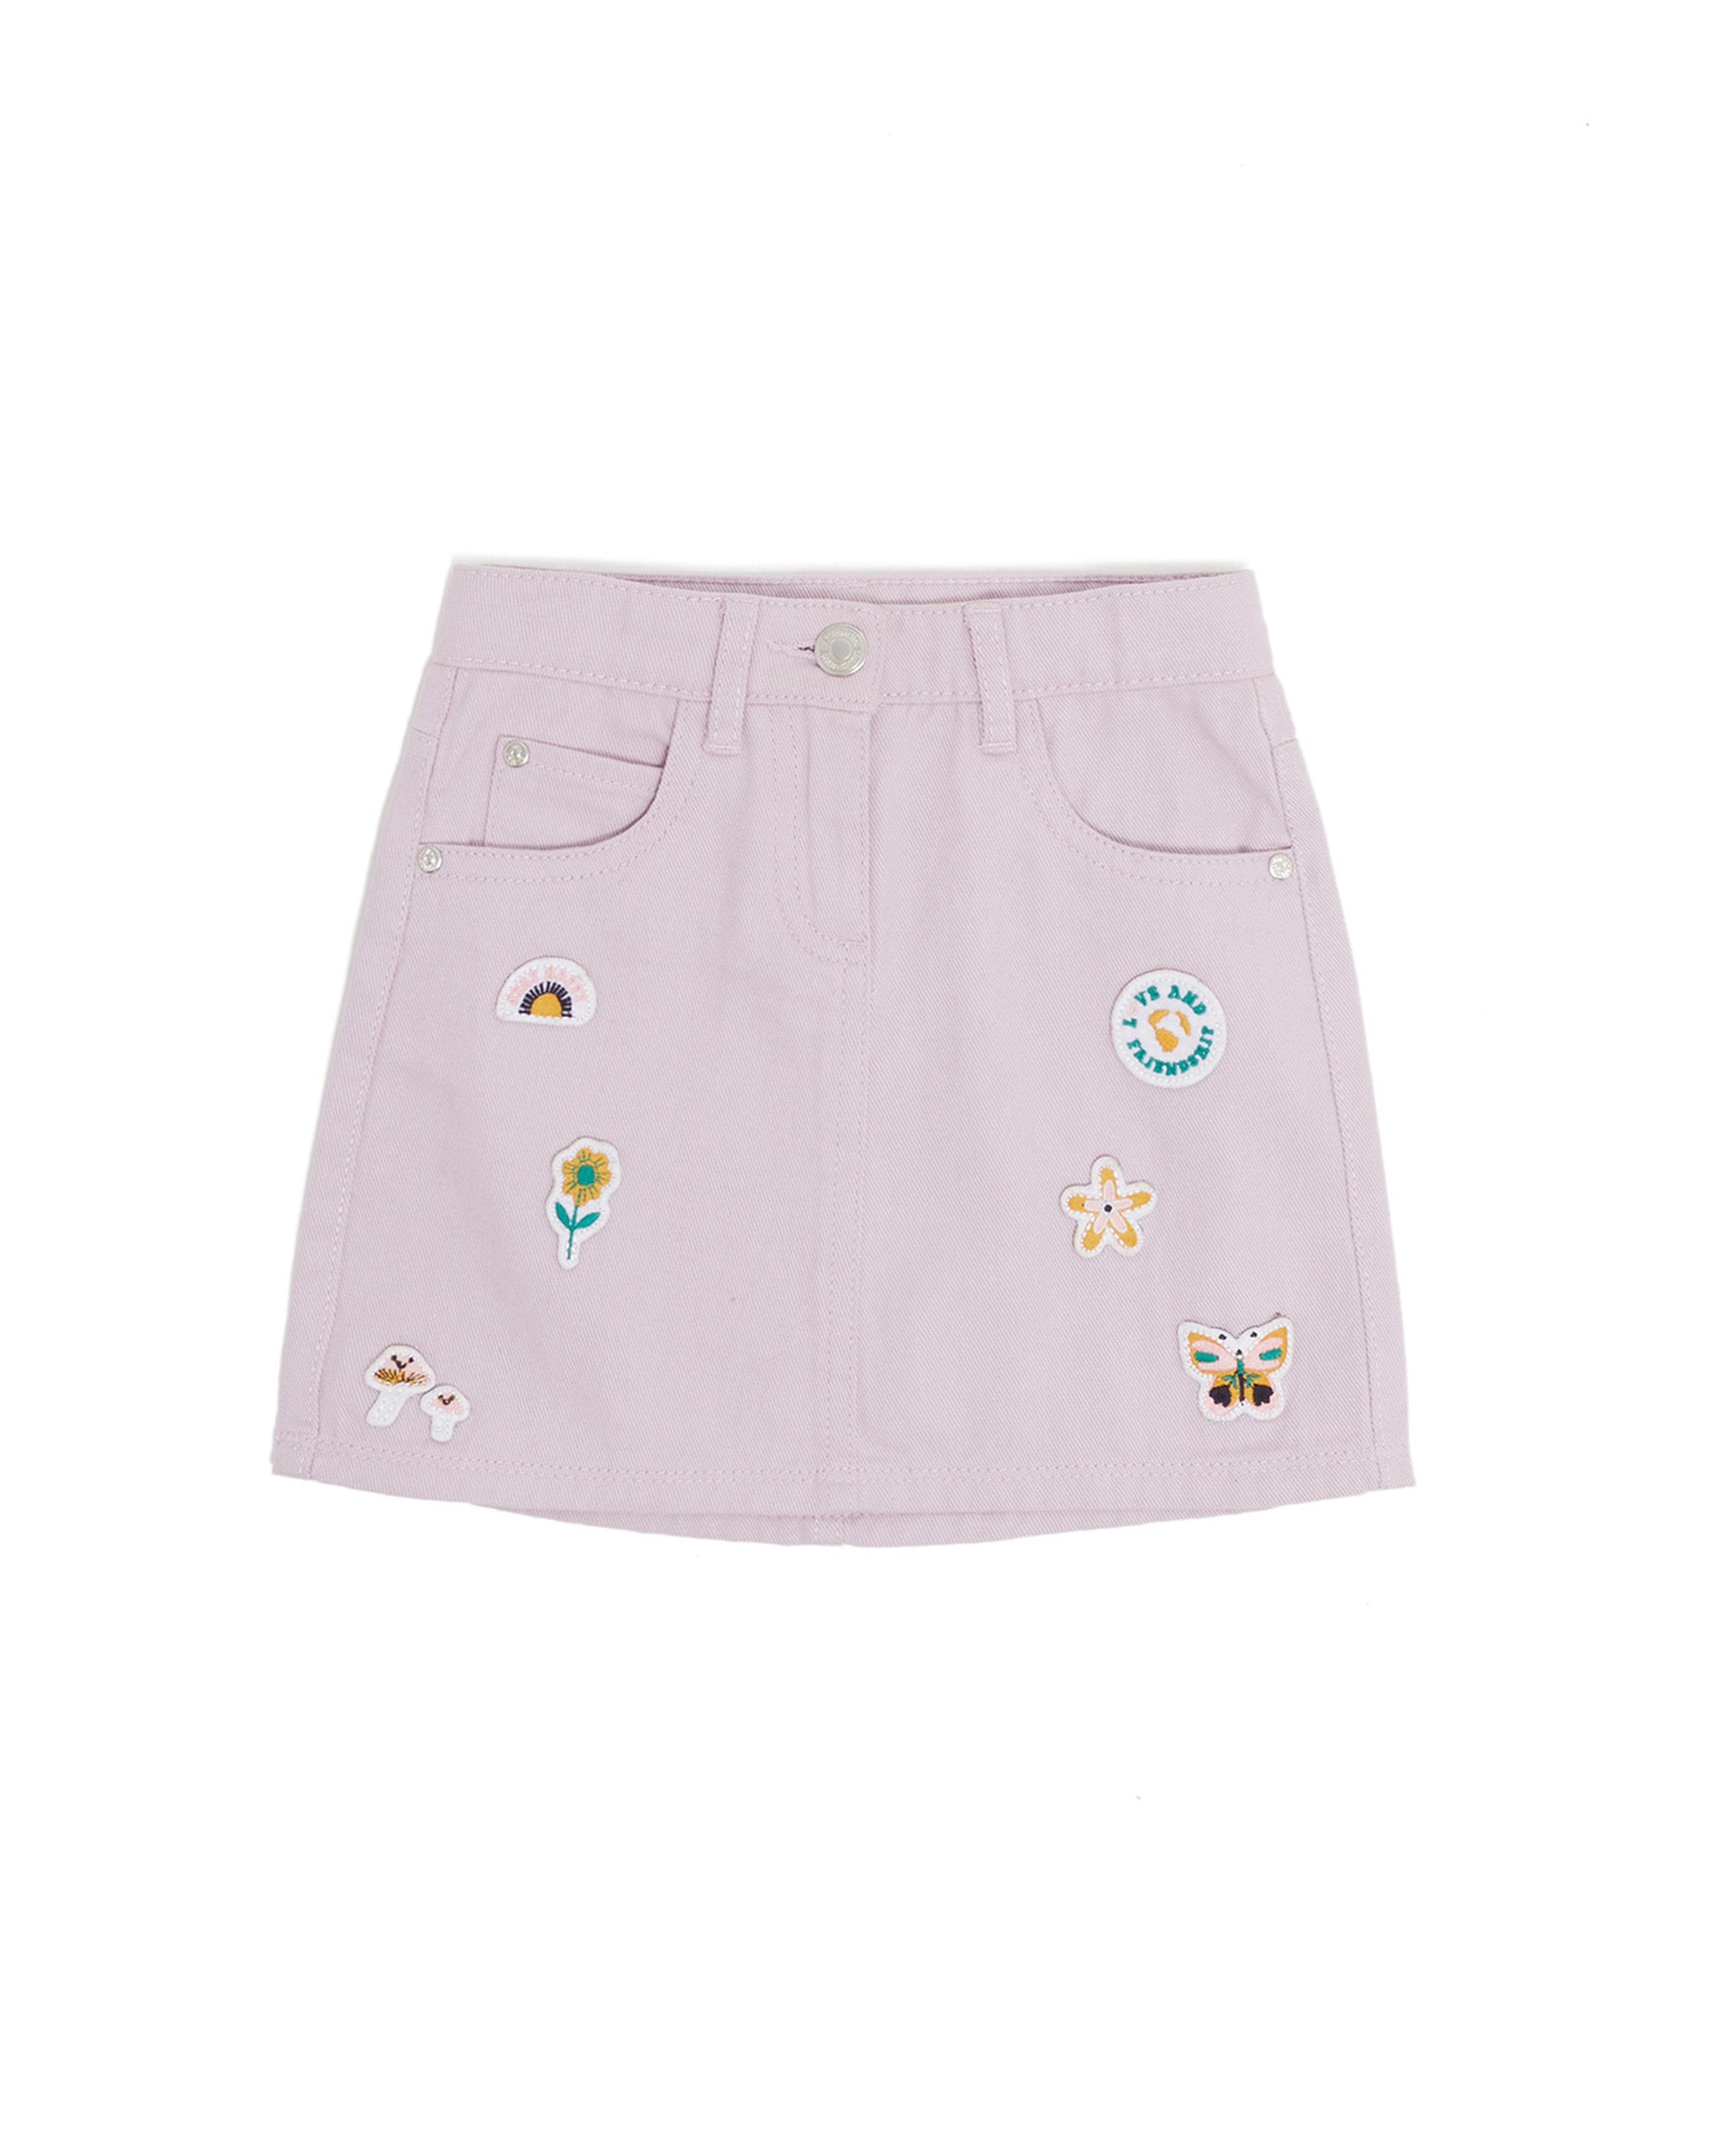 Applique Detail Mini Skirt with Button Closure